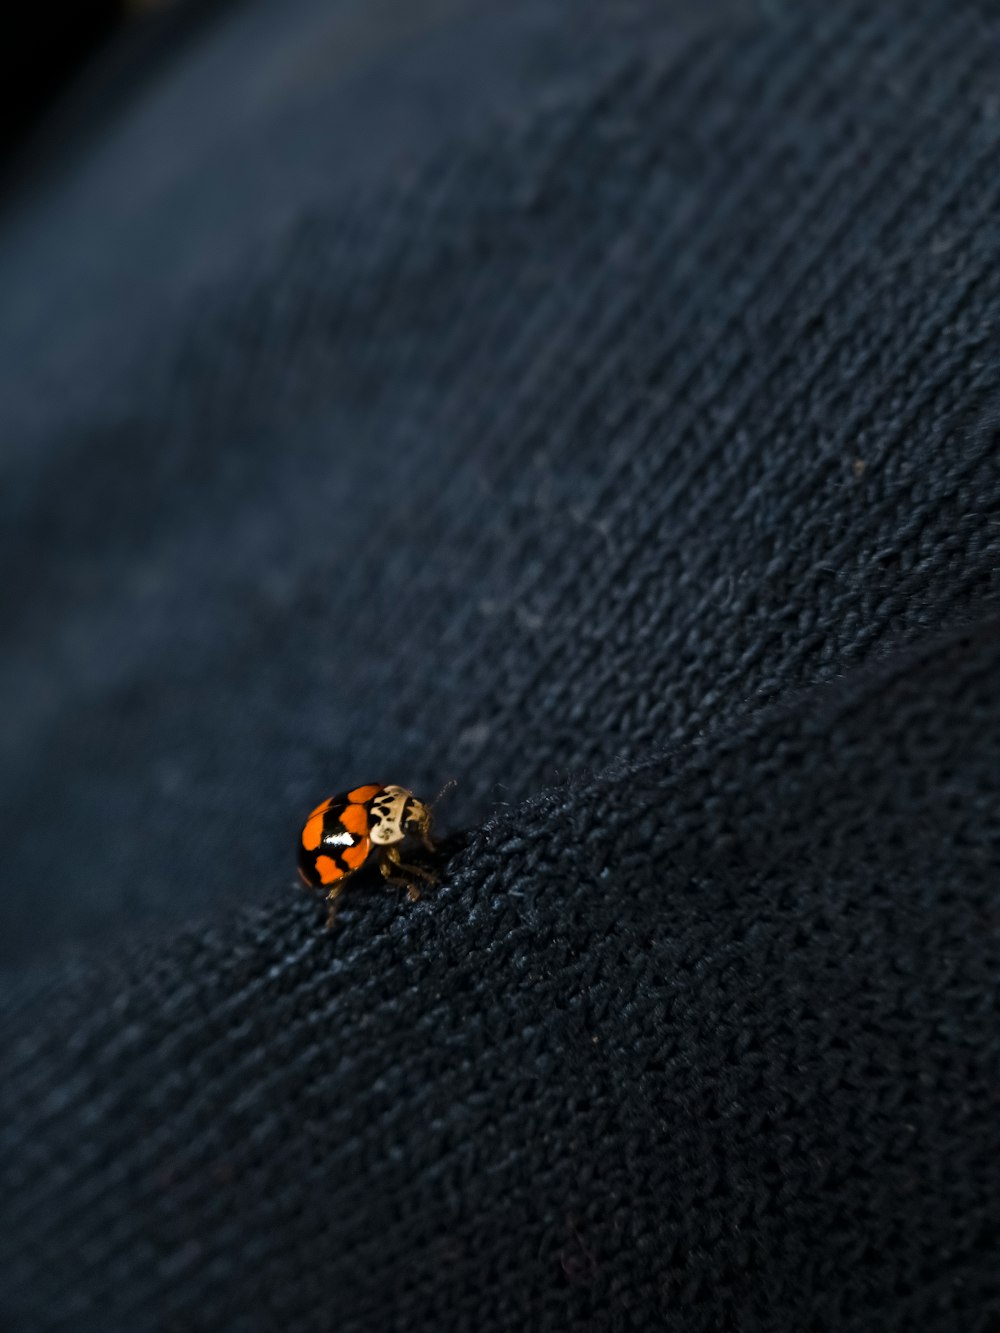 a small orange and black bug on a black cloth